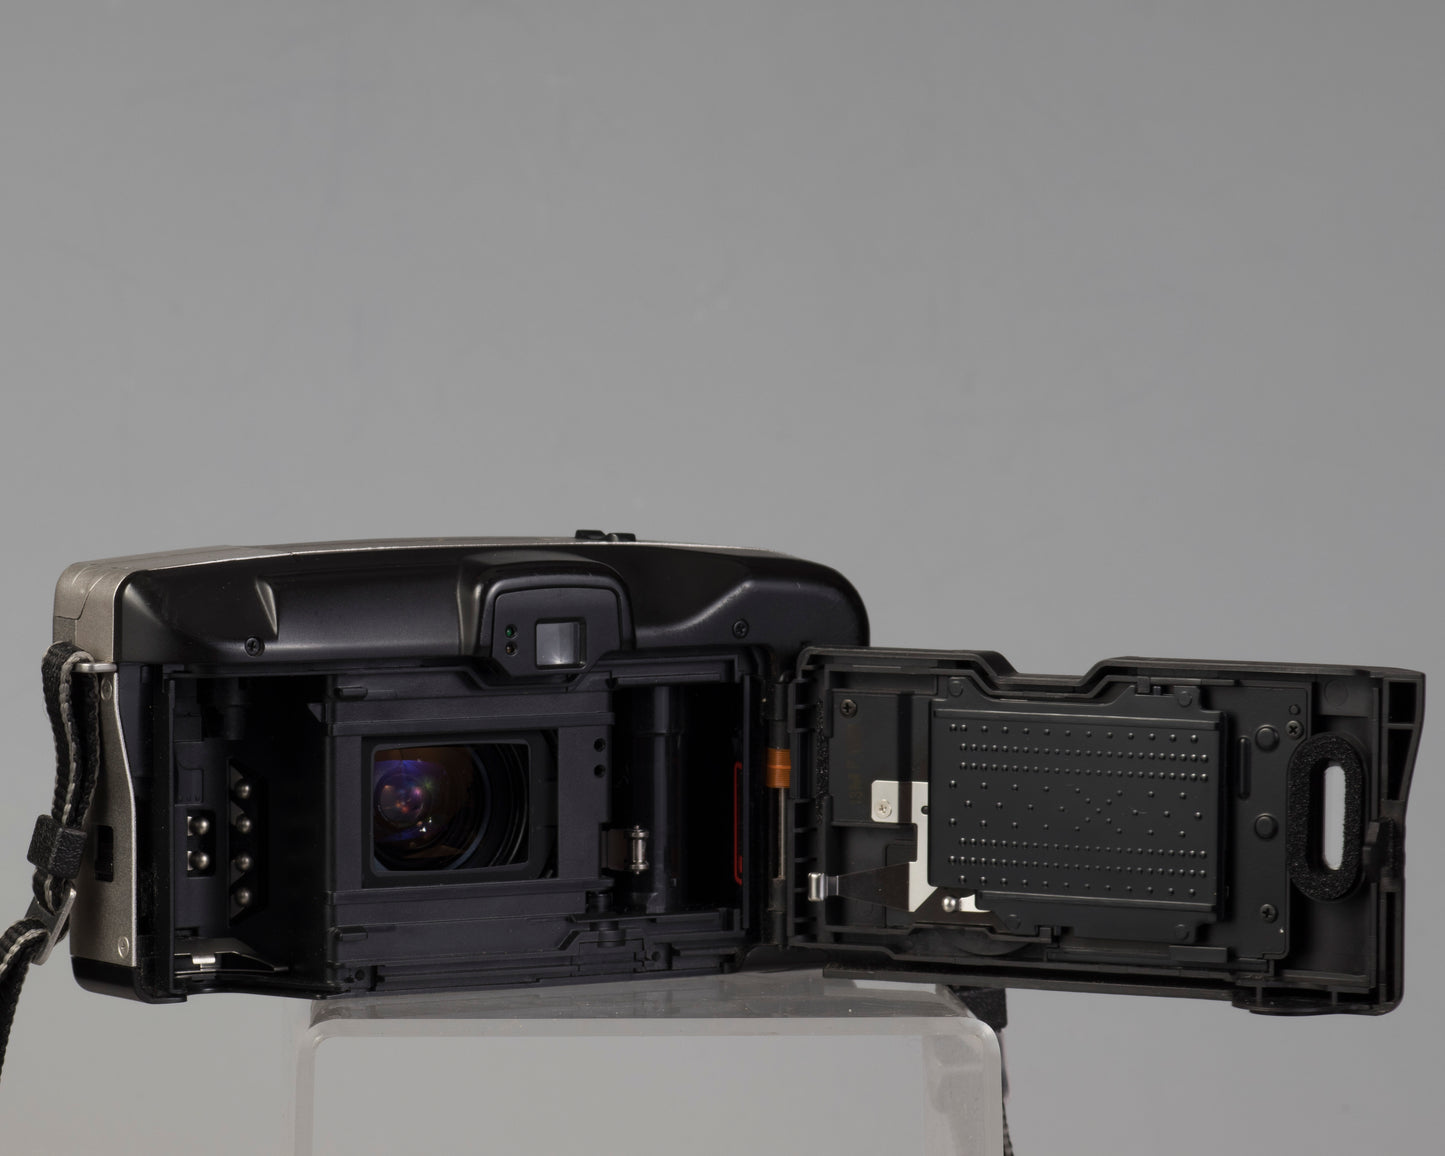 Canon Sure Shot Z135 35mm film camera (serial 6003033)